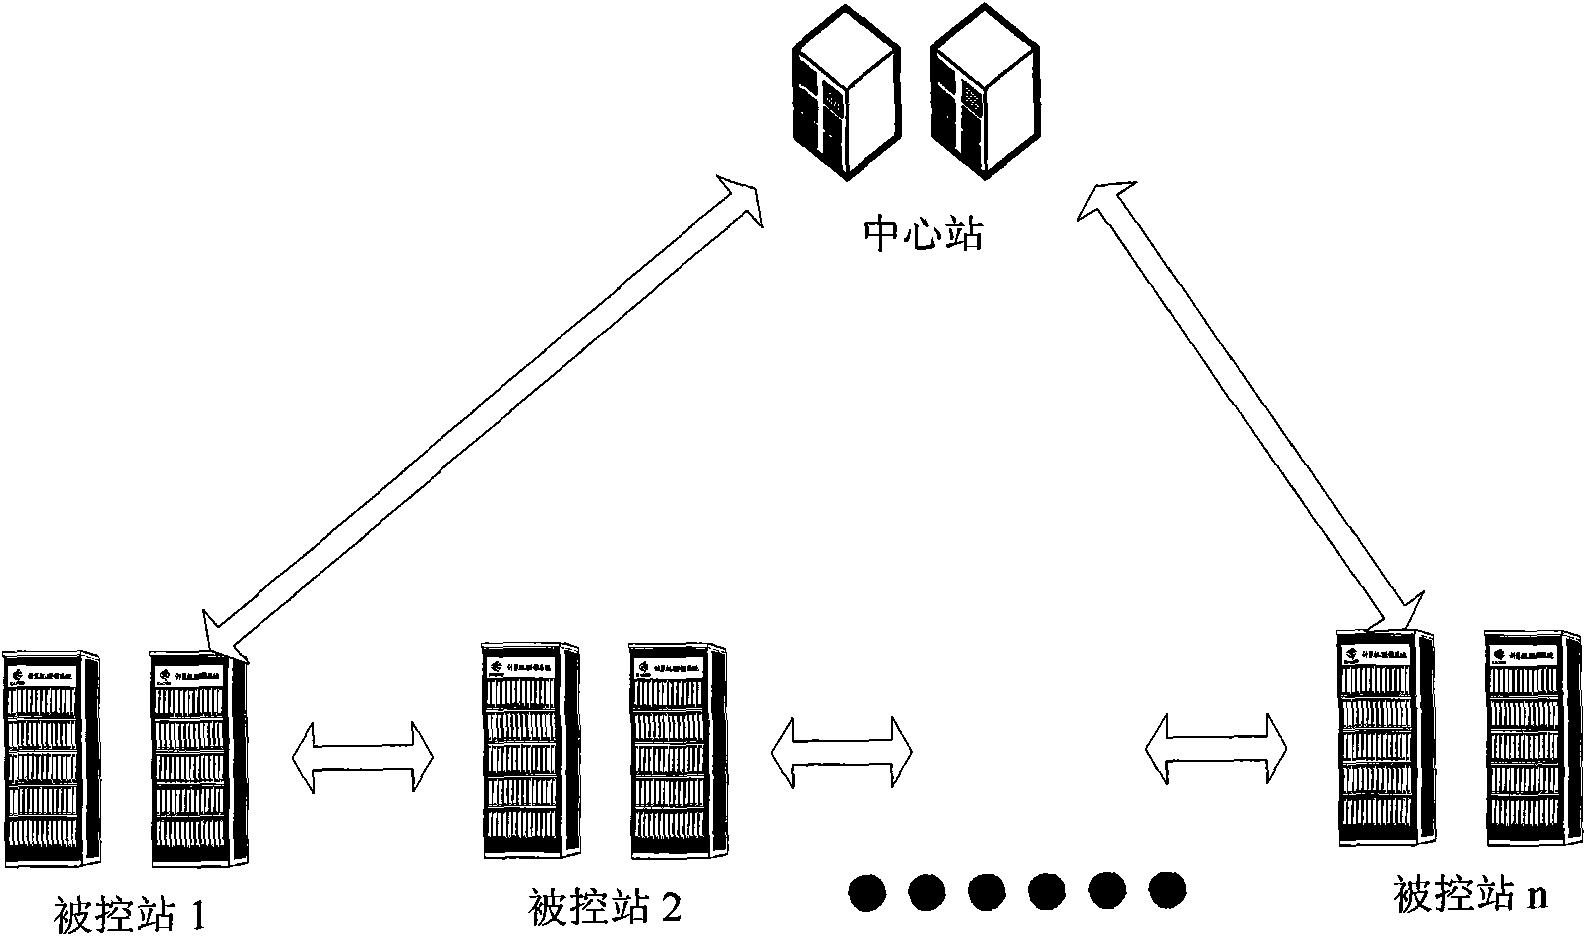 Regional computer interlocking control method with local control